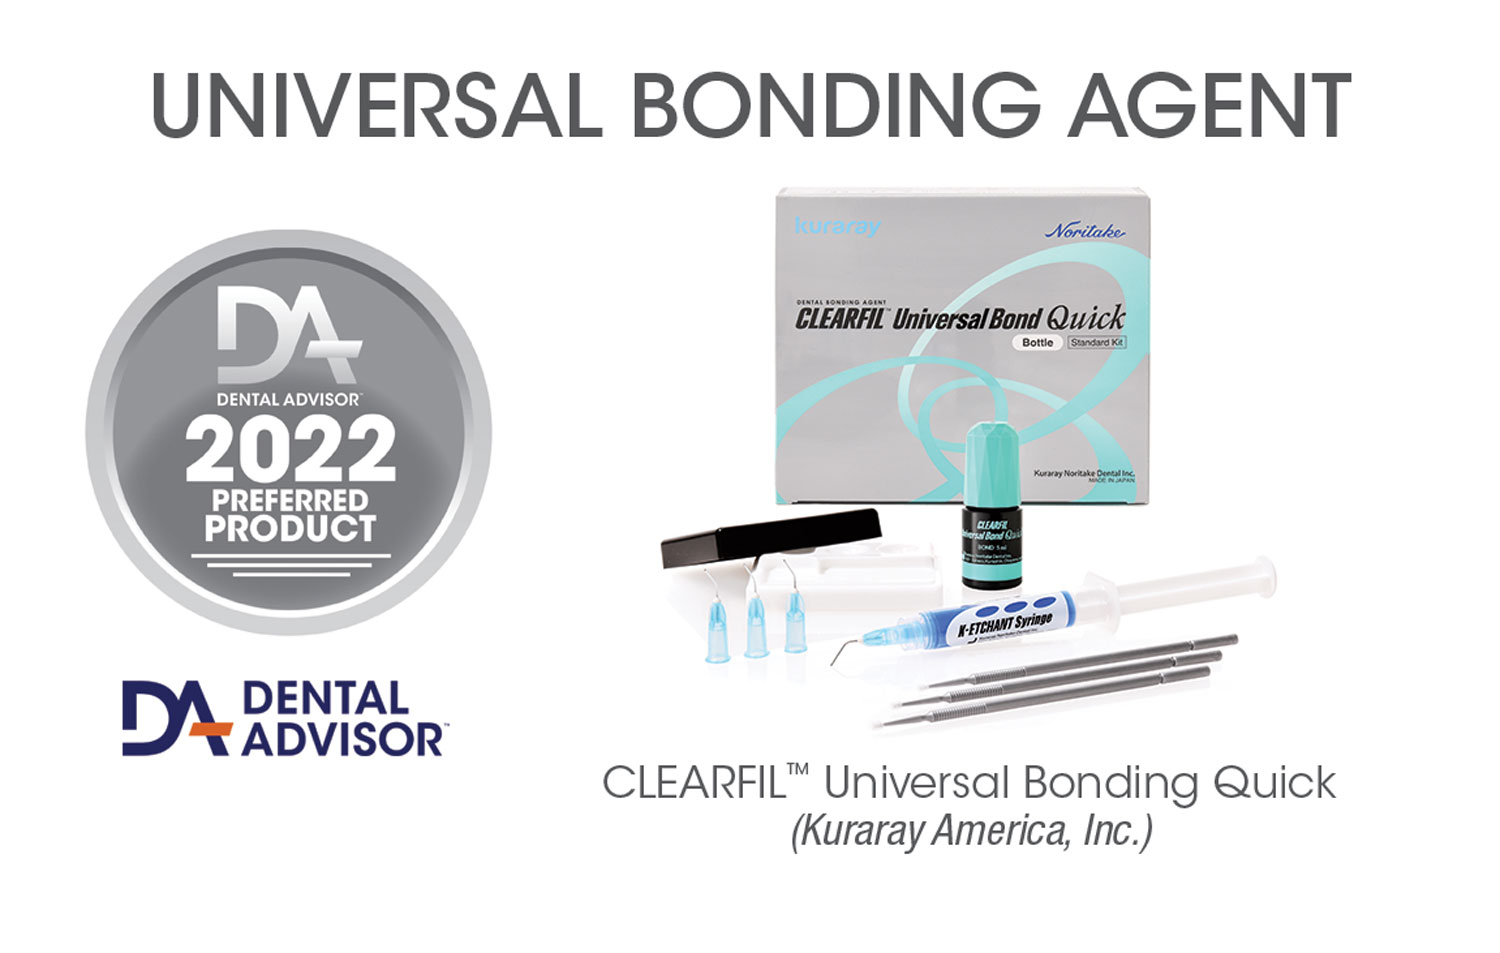 CLEARFIL Universal Bond Quick